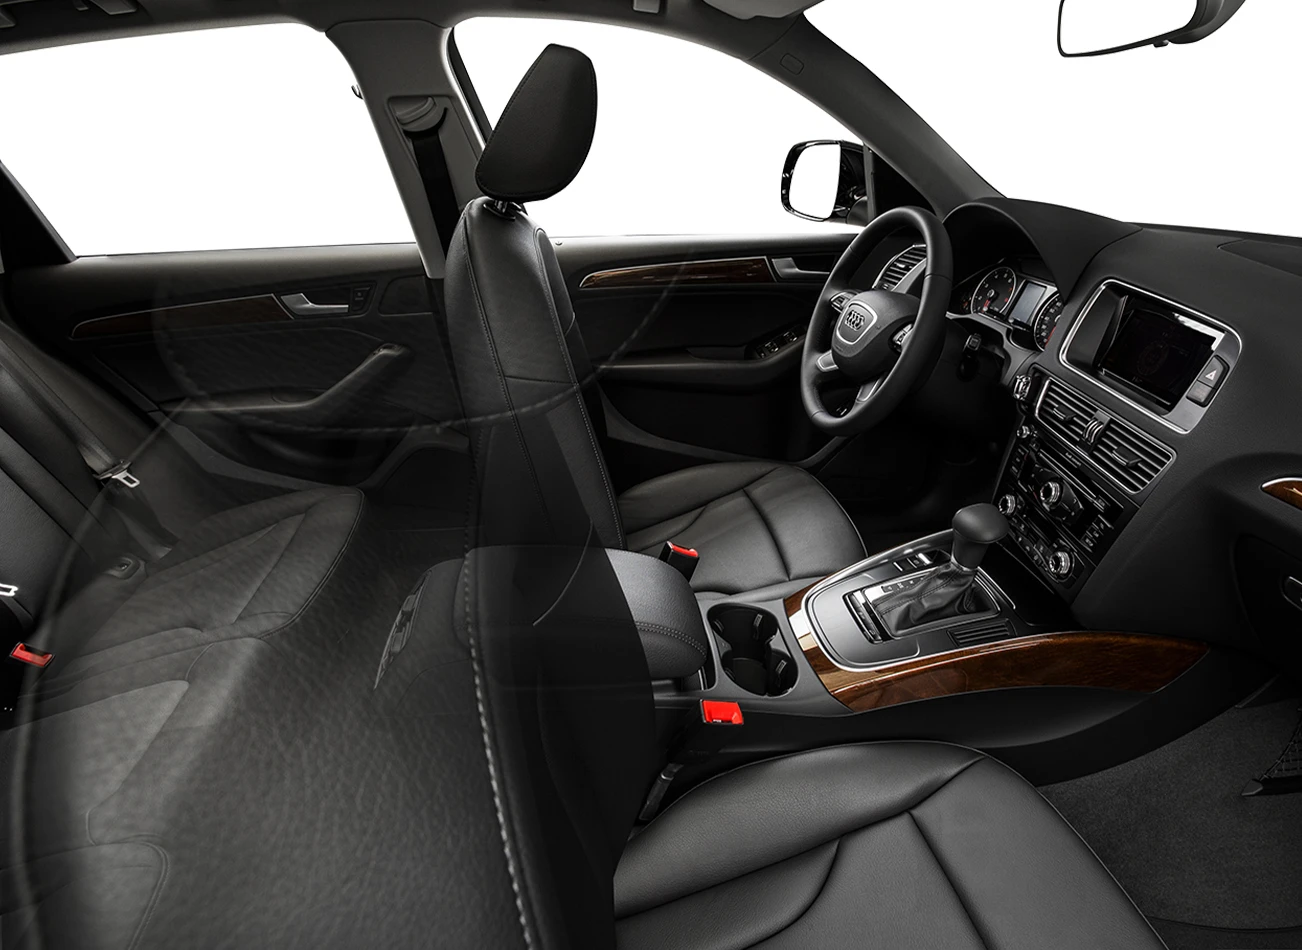 2015 Audi Q5 Review: Reviews, Photos, and More: Reasons to Buy #3 | CarMax